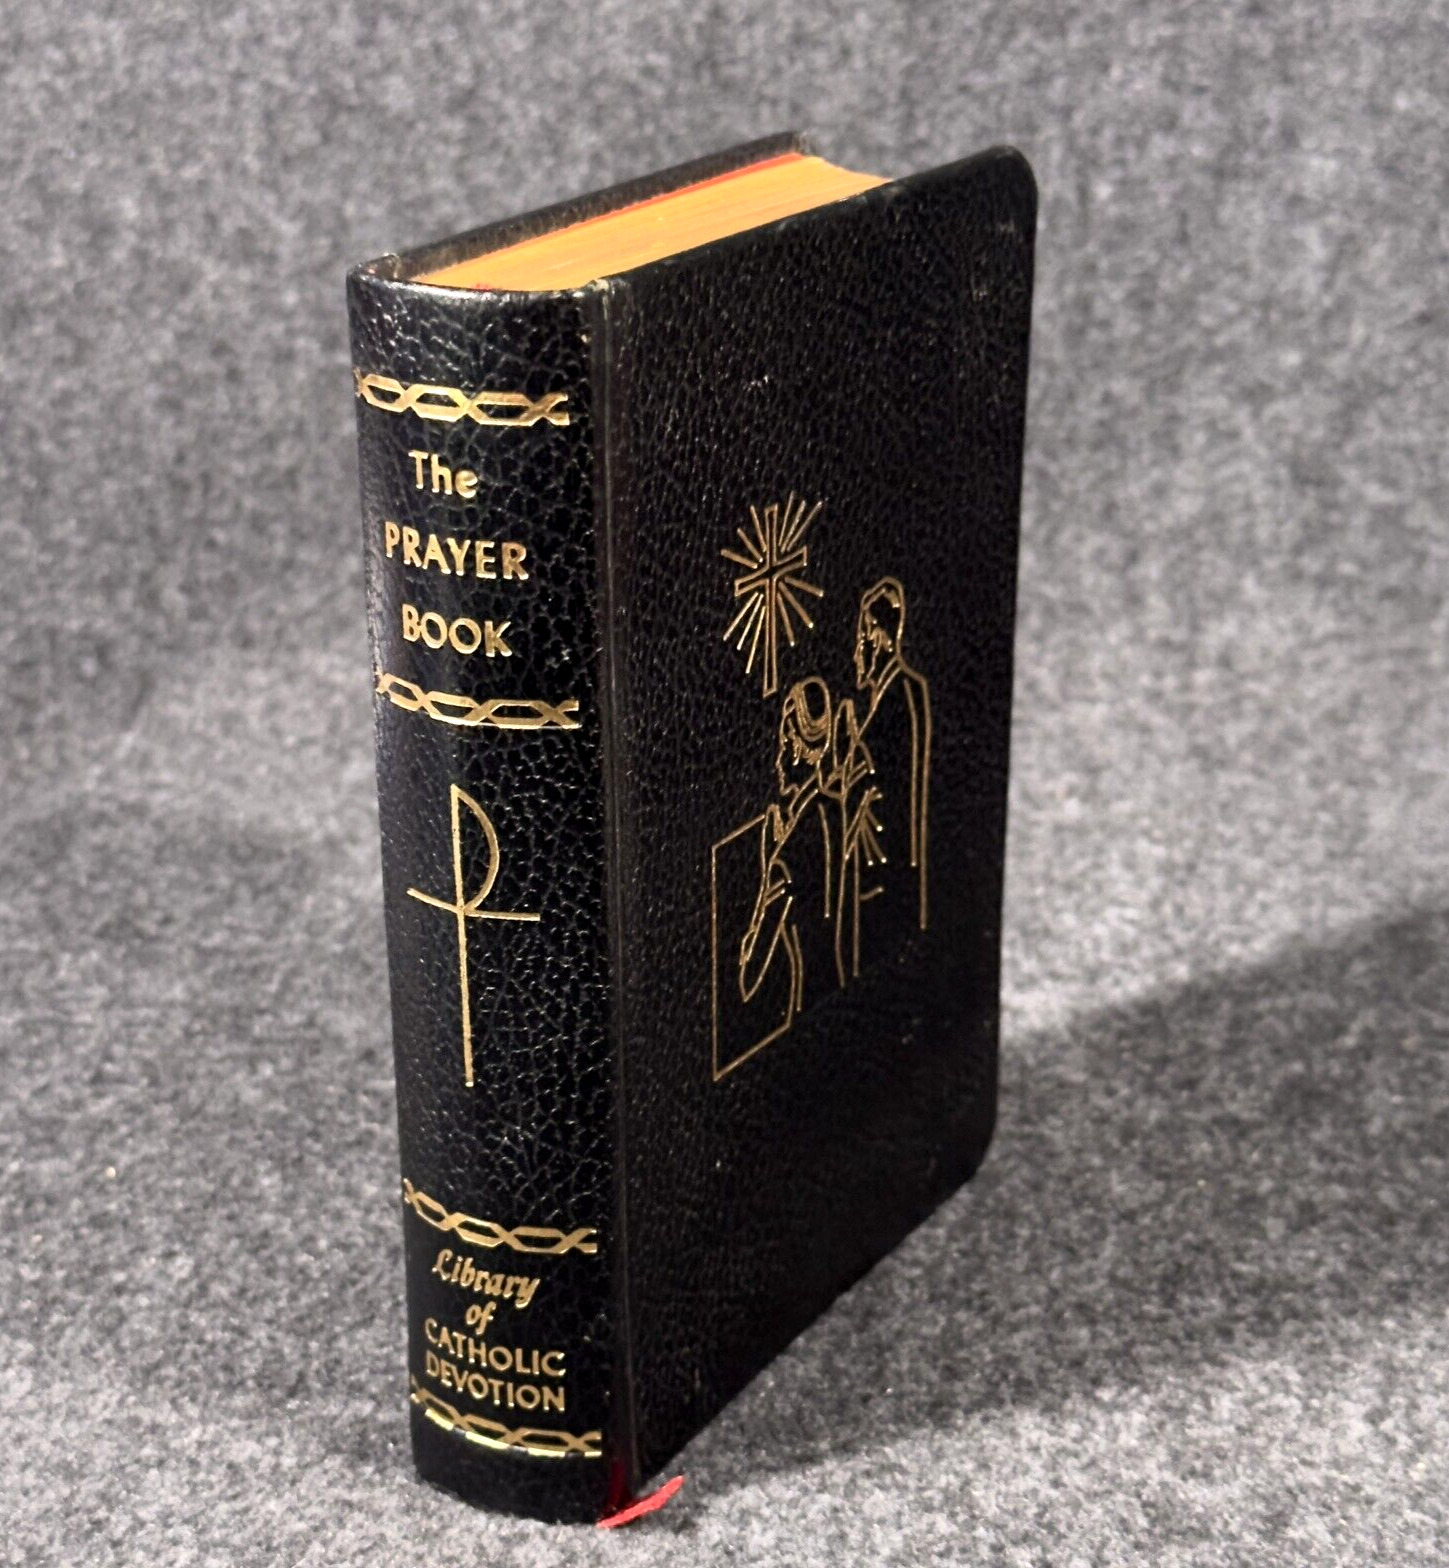 The Prayer Book - The Catholic Press 1959 - John P. O’Connell Jex Martin - Good